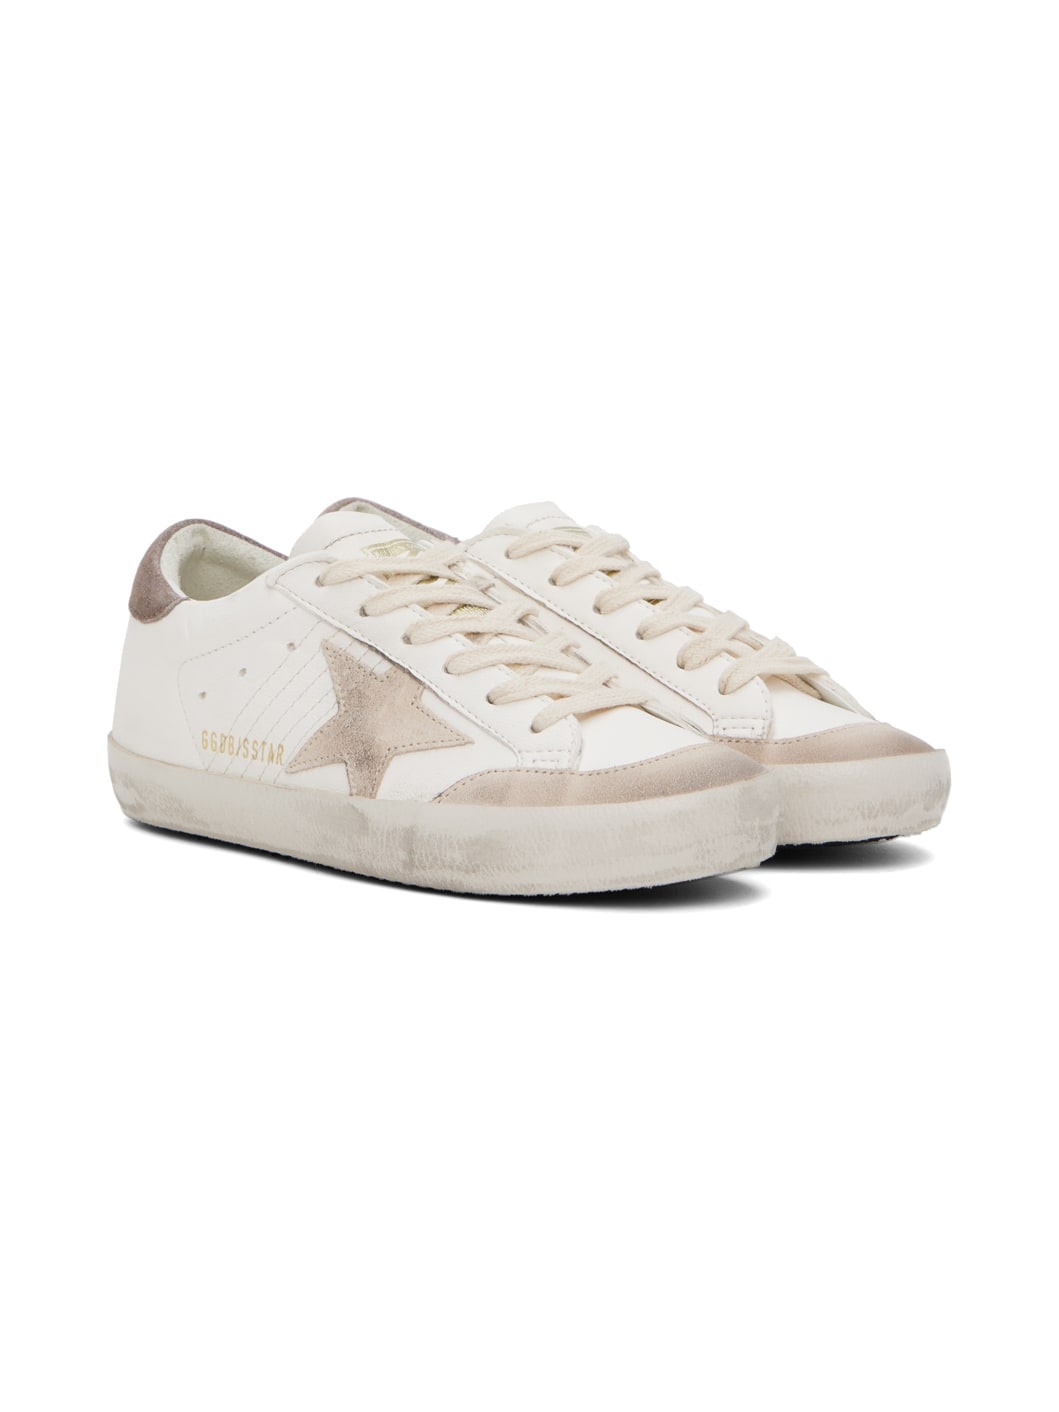 White & Taupe Super-Star Penstar Sneakers - 4